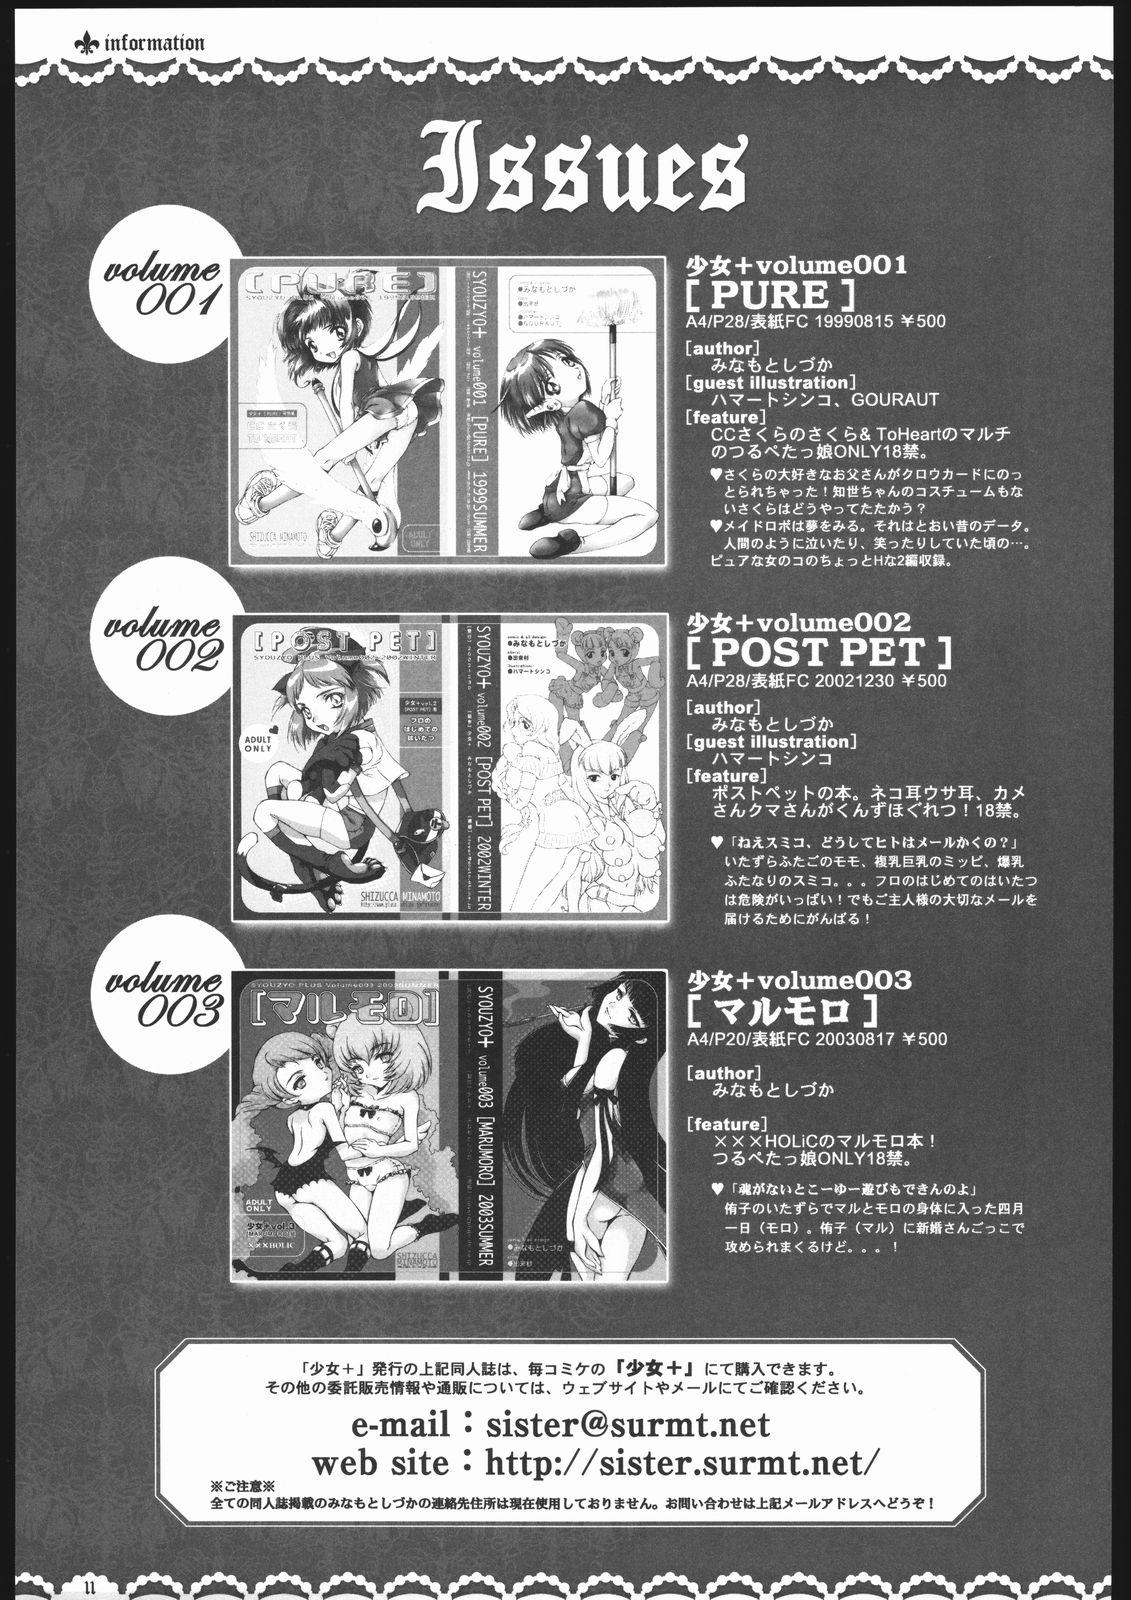 Sex Syouzyo Plus Volume 004 2005 Summer - Tsubasa reservoir chronicle Freeporn - Page 10